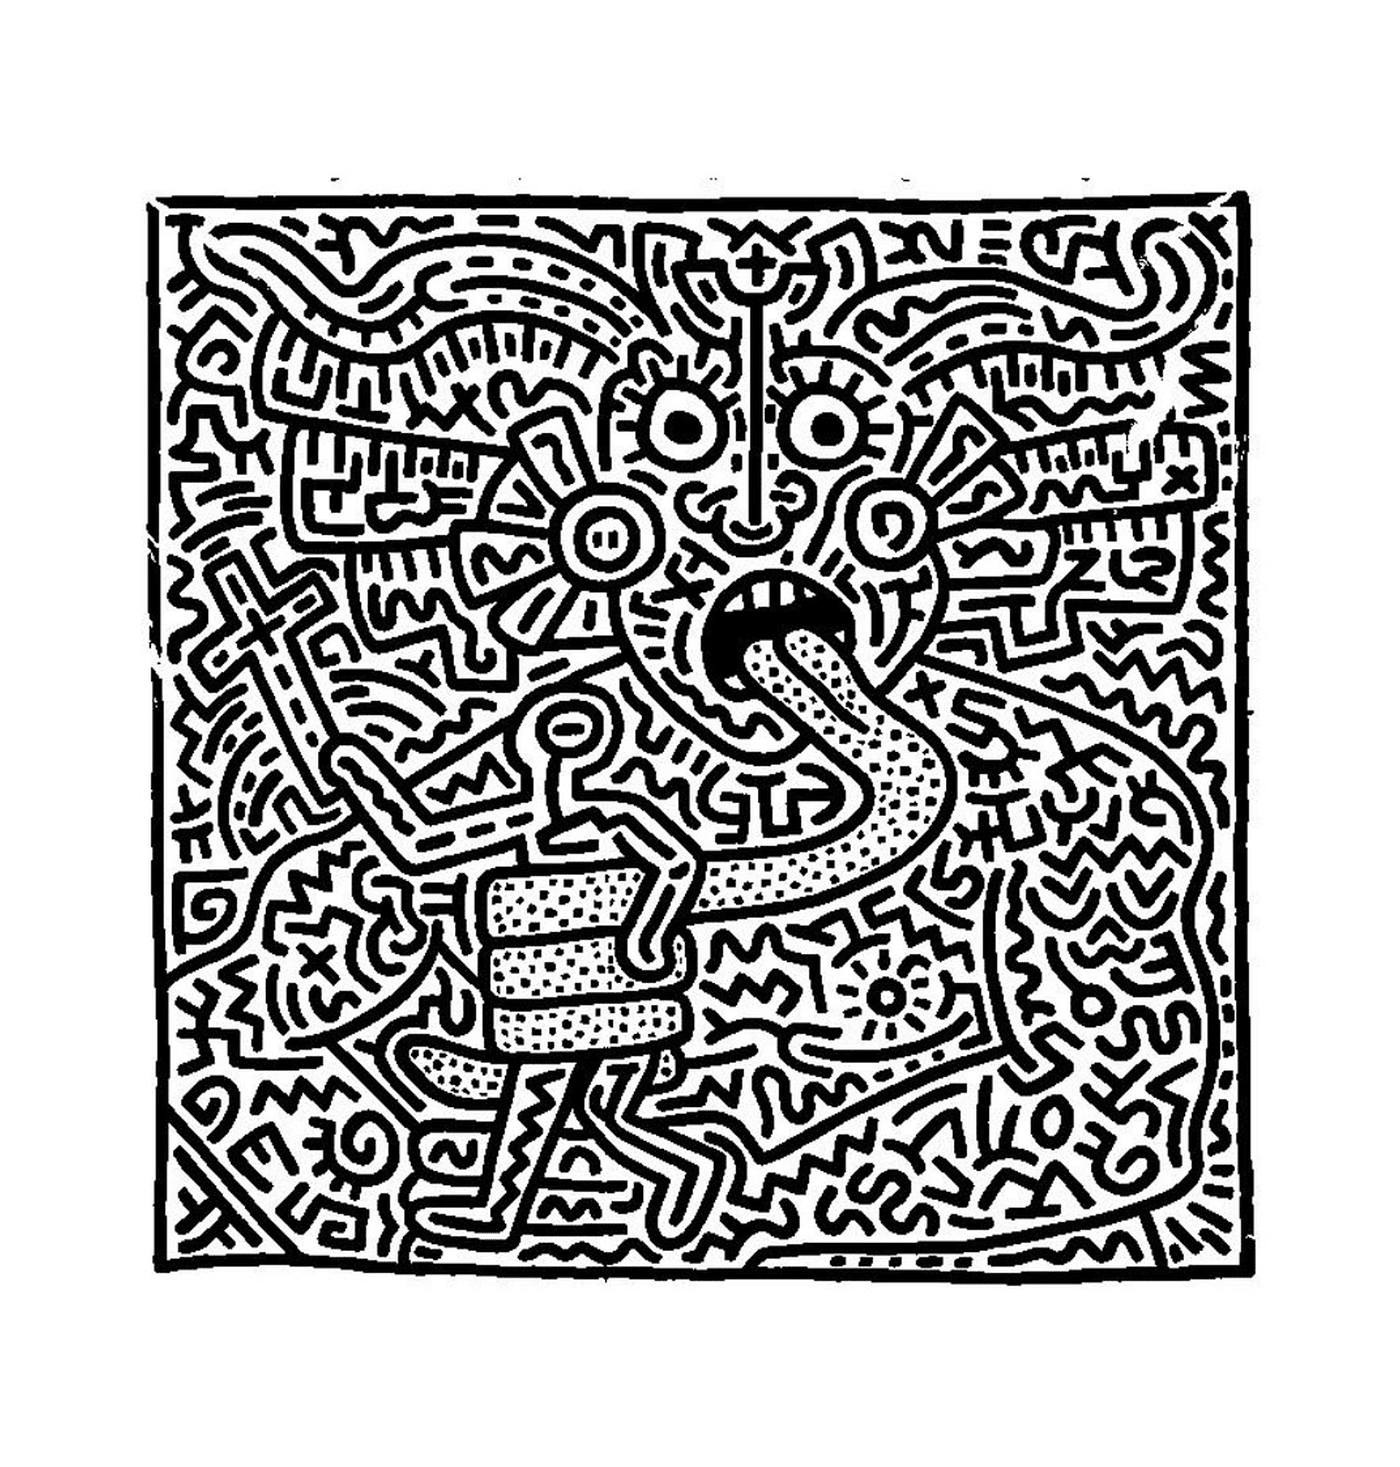   le visage d'un homme selon Keith Haring 